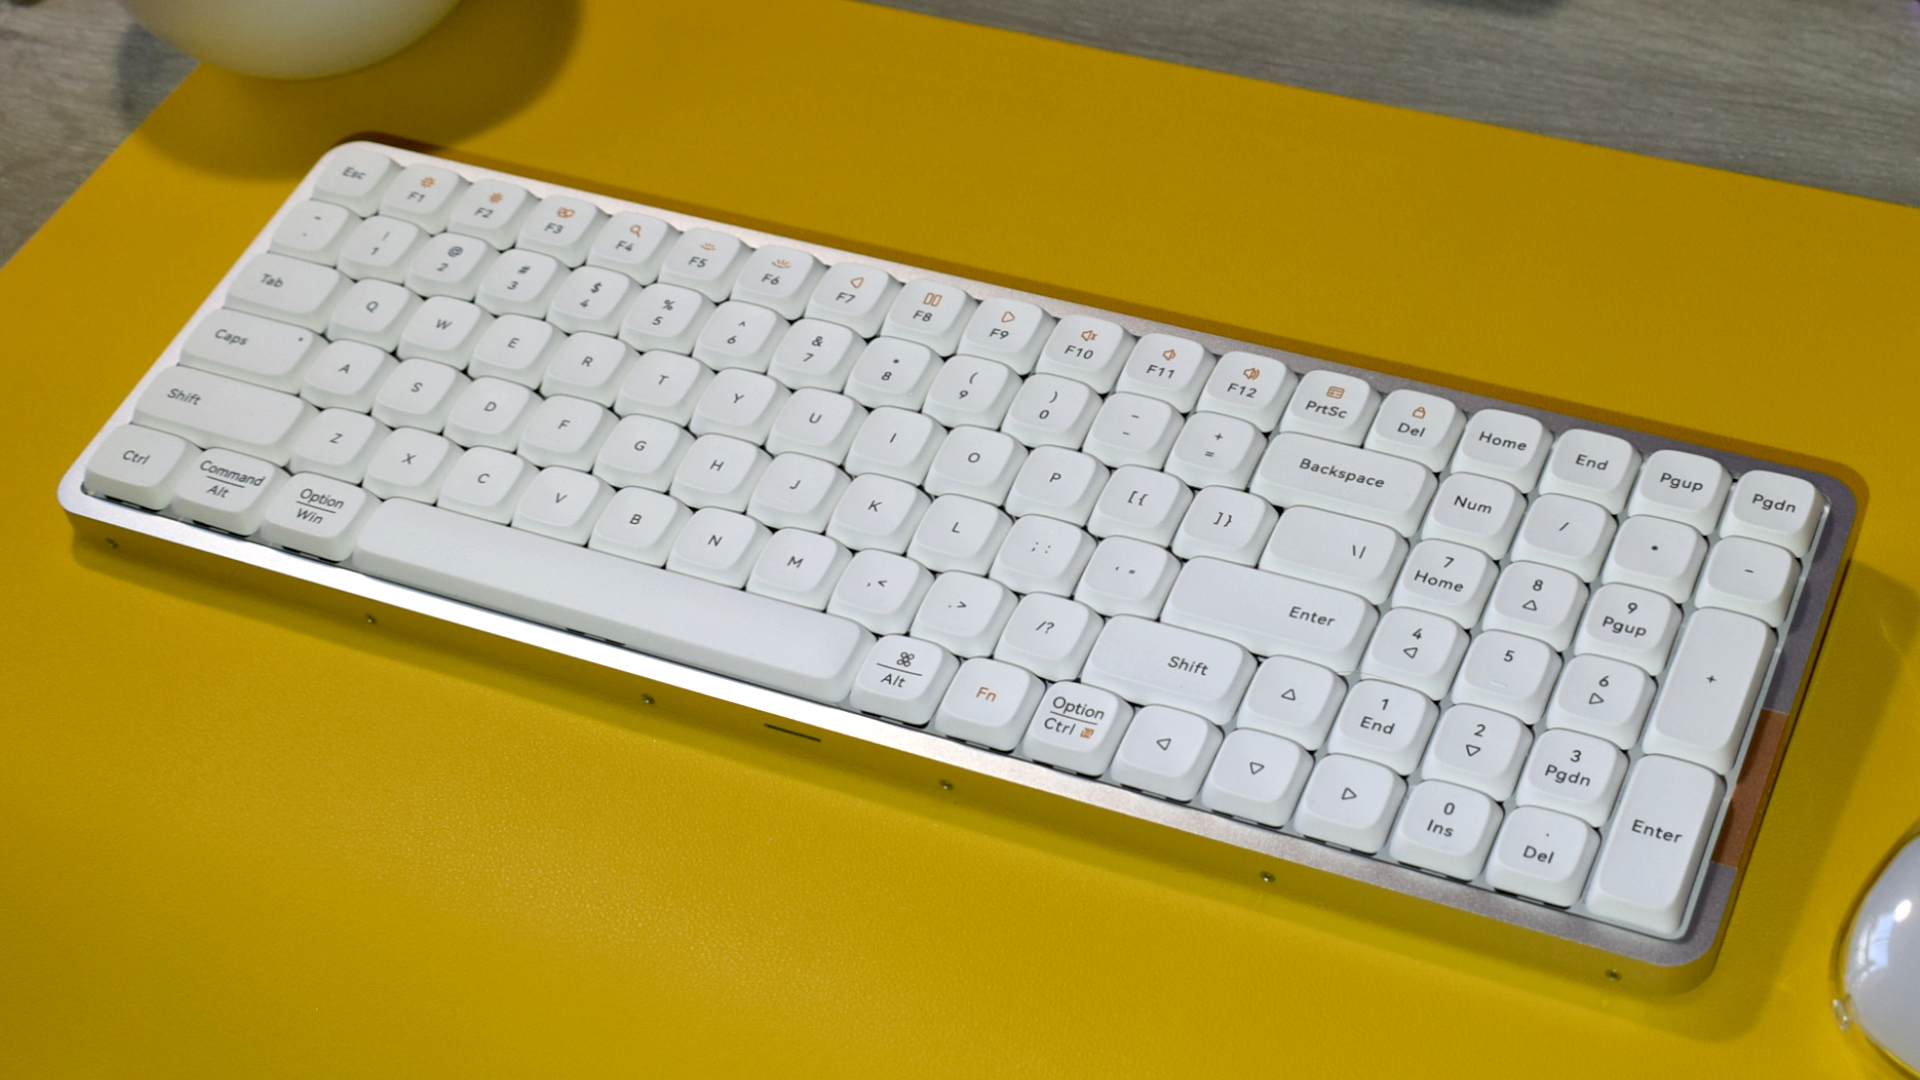 Lofree Flow mechanical wireless keyboard photograph showing full keyboard at an angle